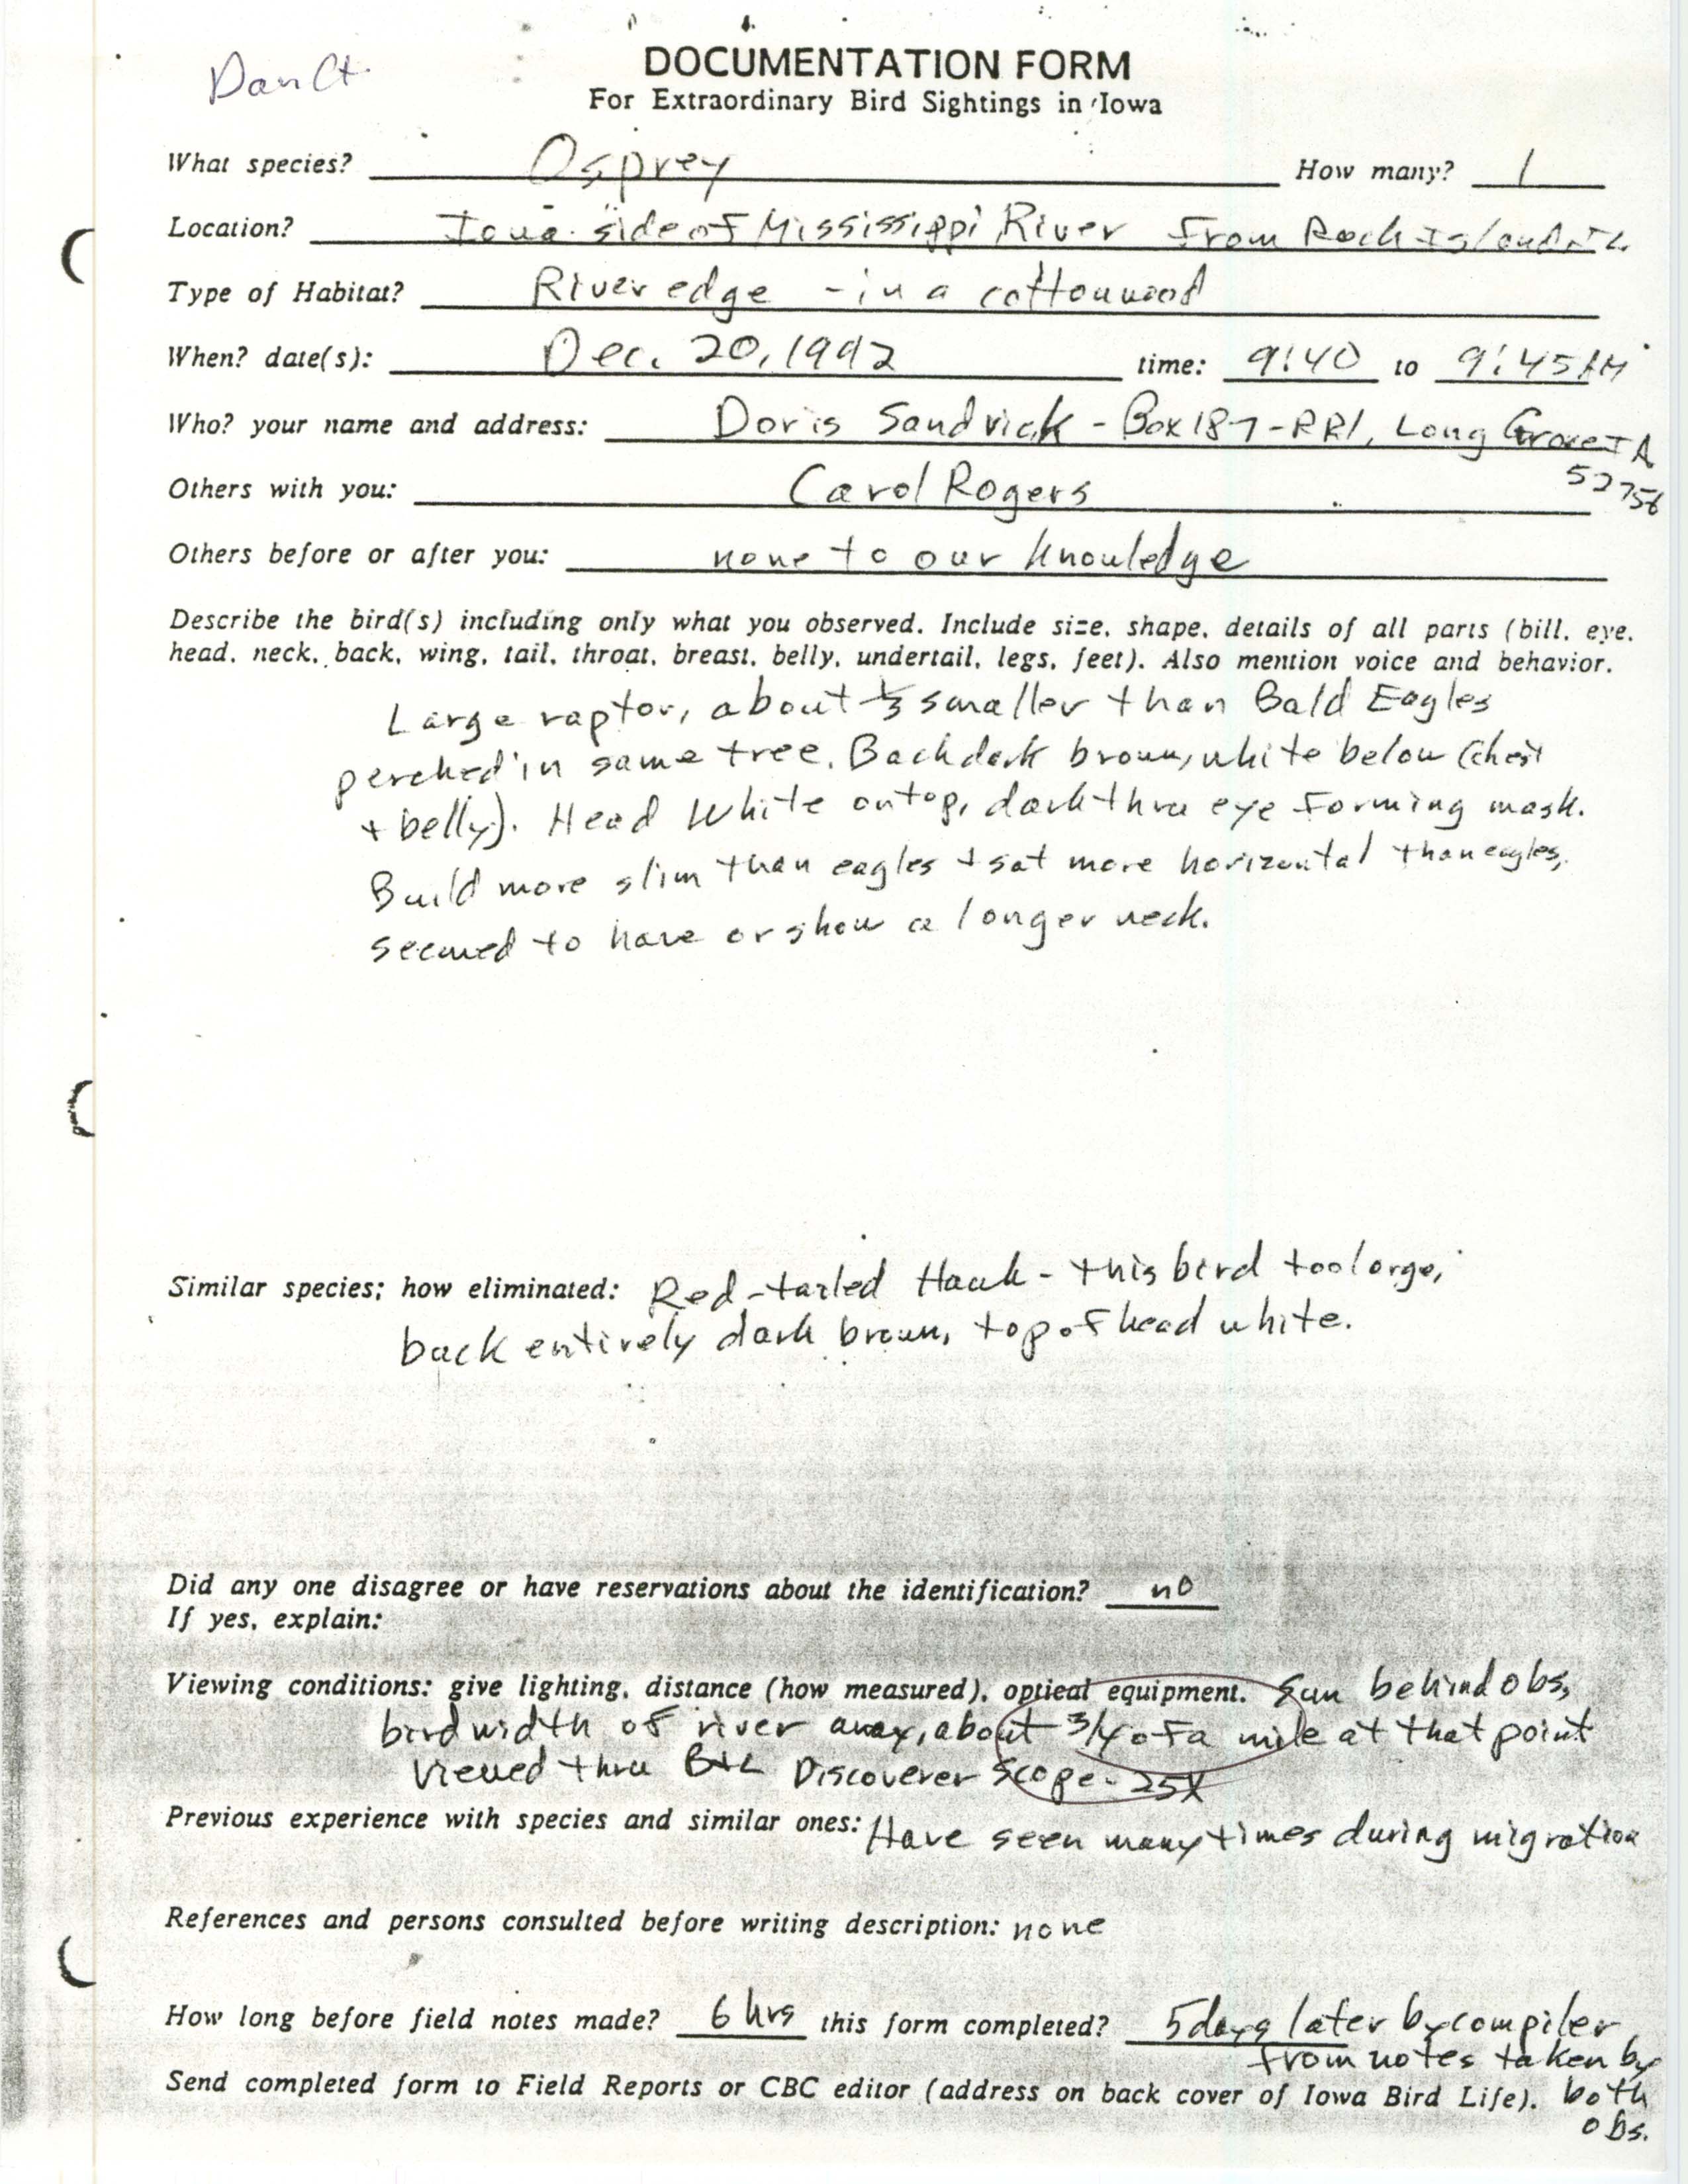 Rare bird documentation form for Osprey at the Mississippi River near Davenport, 1992